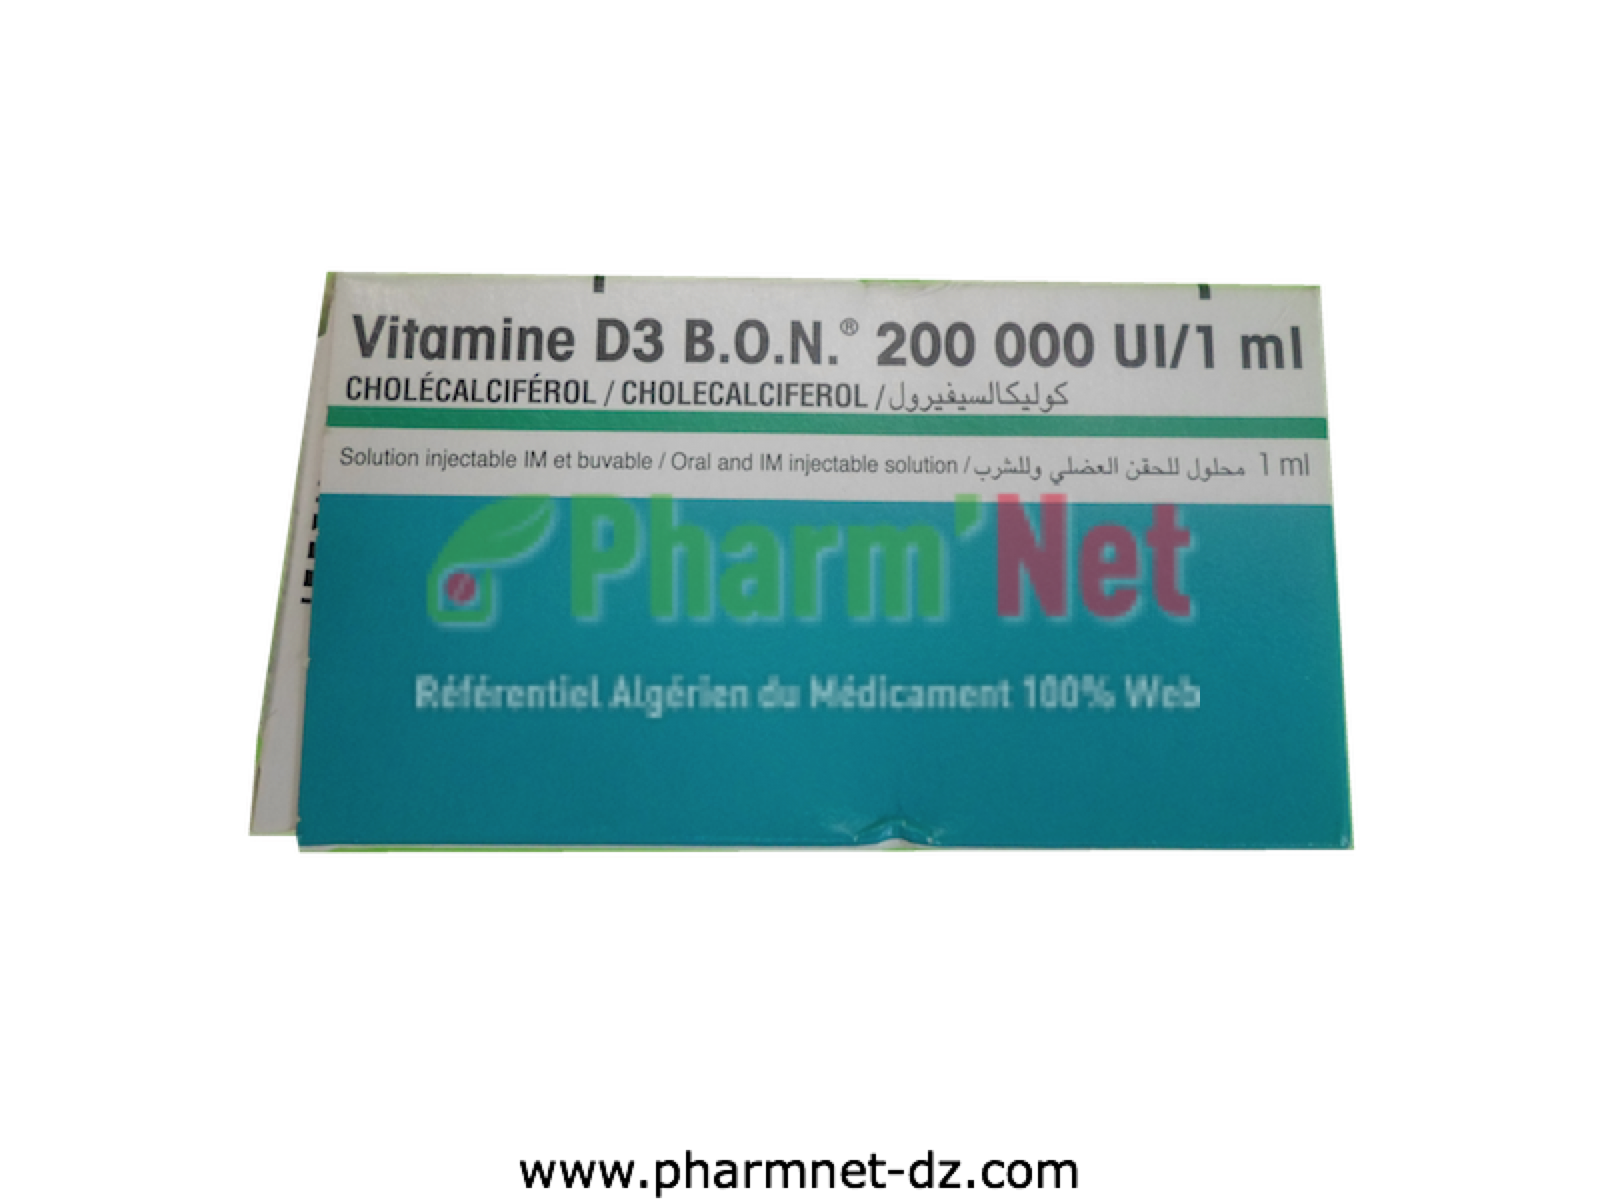 Vitamine D3 B O N 200 000ui Ml Sol Inj Im Et Sol Buv B 01 Amp De 1ml Pharmnet Encyclopedie Des Medicaments En Algerie Propriete Sarl Esahti